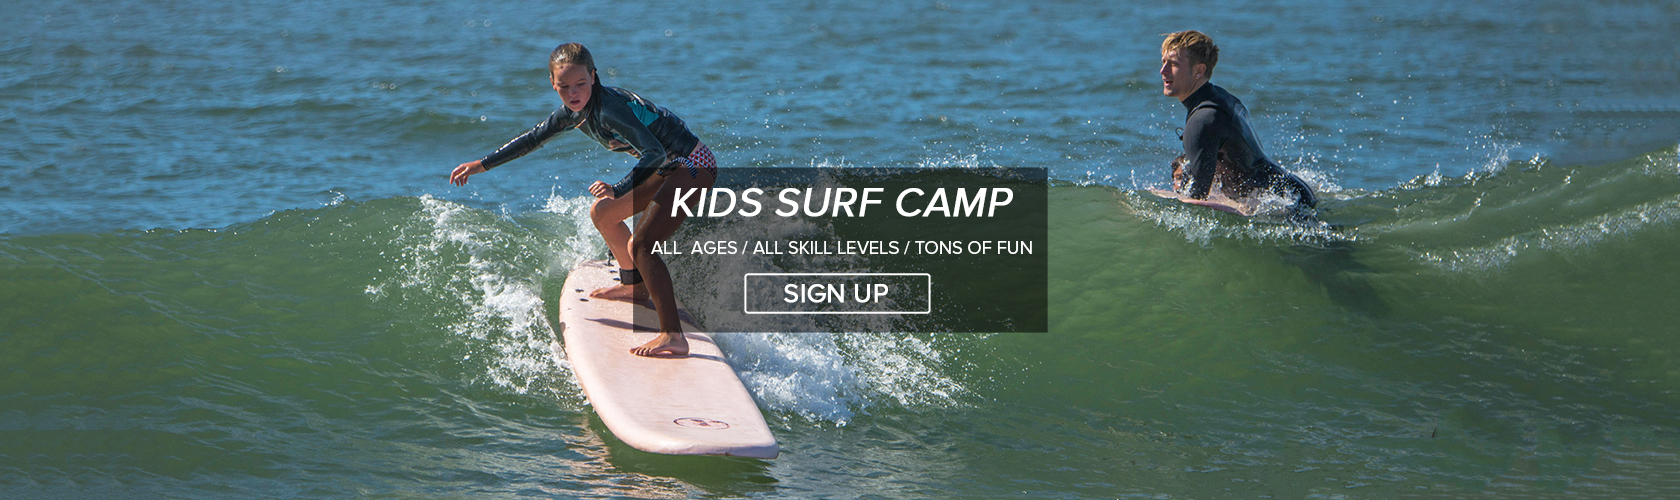 Kids Surf Camp Slider 2018.jpg